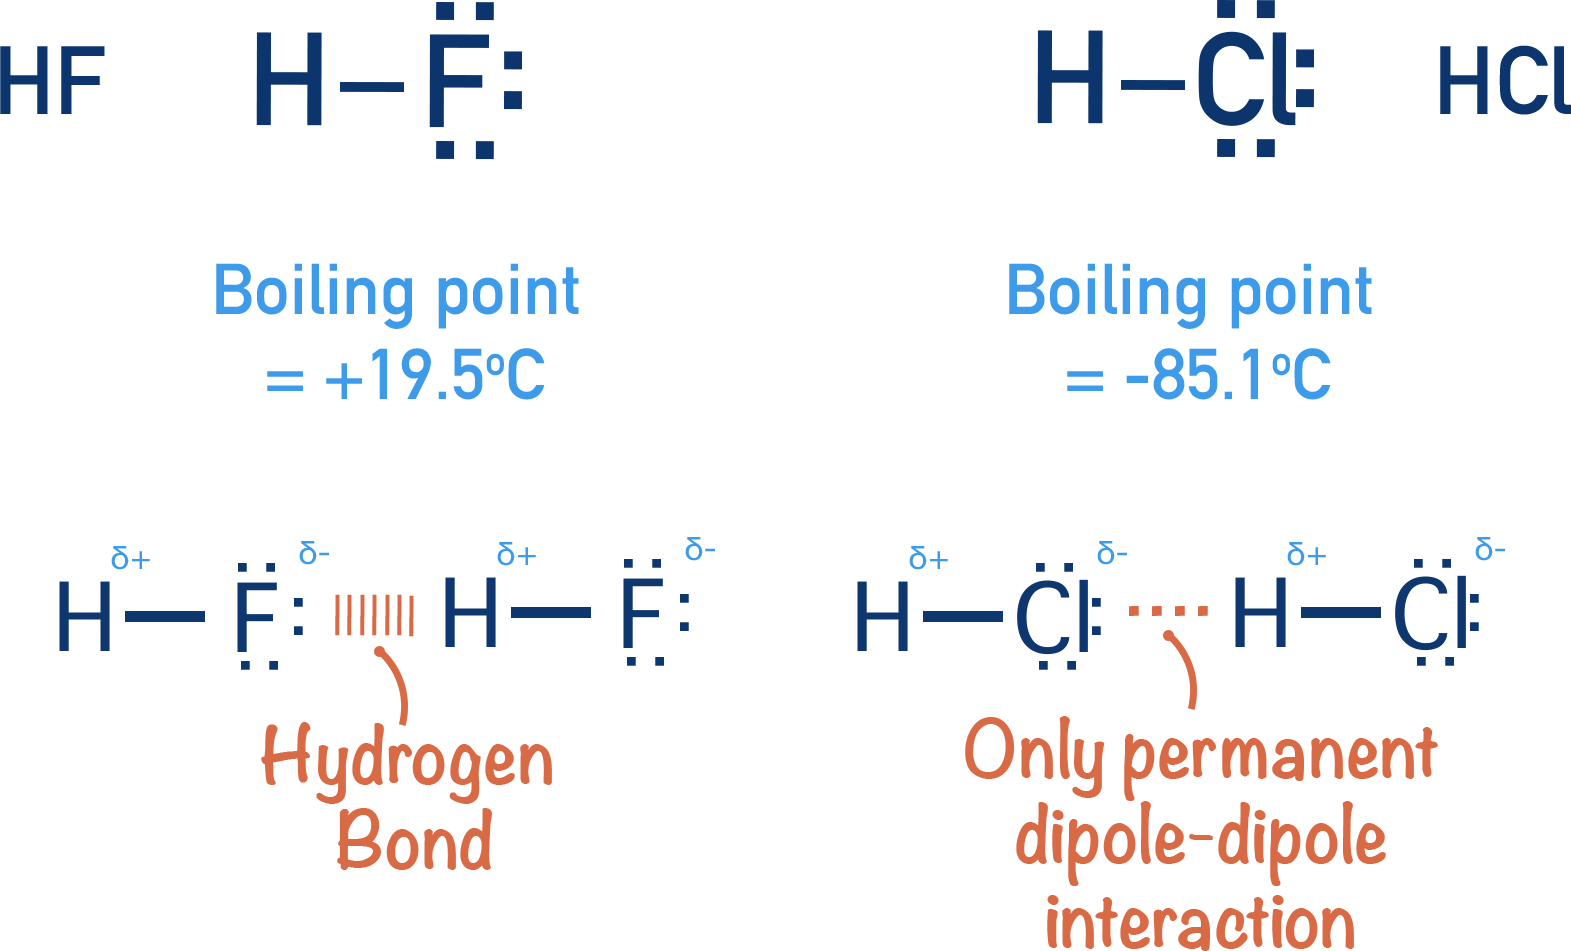 melting point hydrogen flouride and hydrogen chloride hydrogen bonding permanent dipole